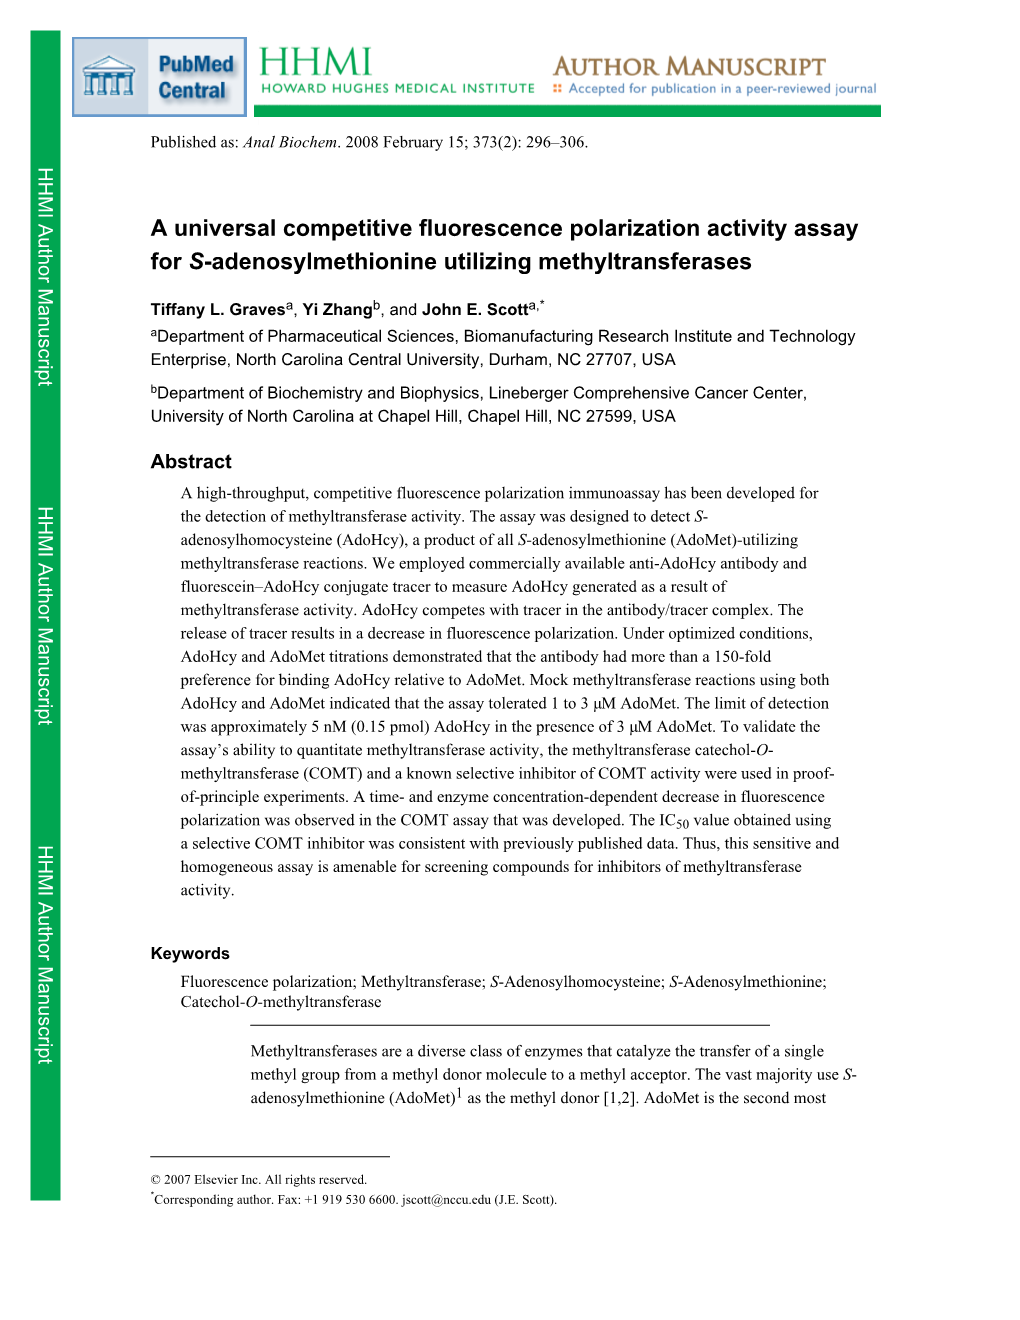 A Universal Competitive Fluorescence Polarization Activity Assay for S-Adenosylmethionine Utilizing Methyltransferases